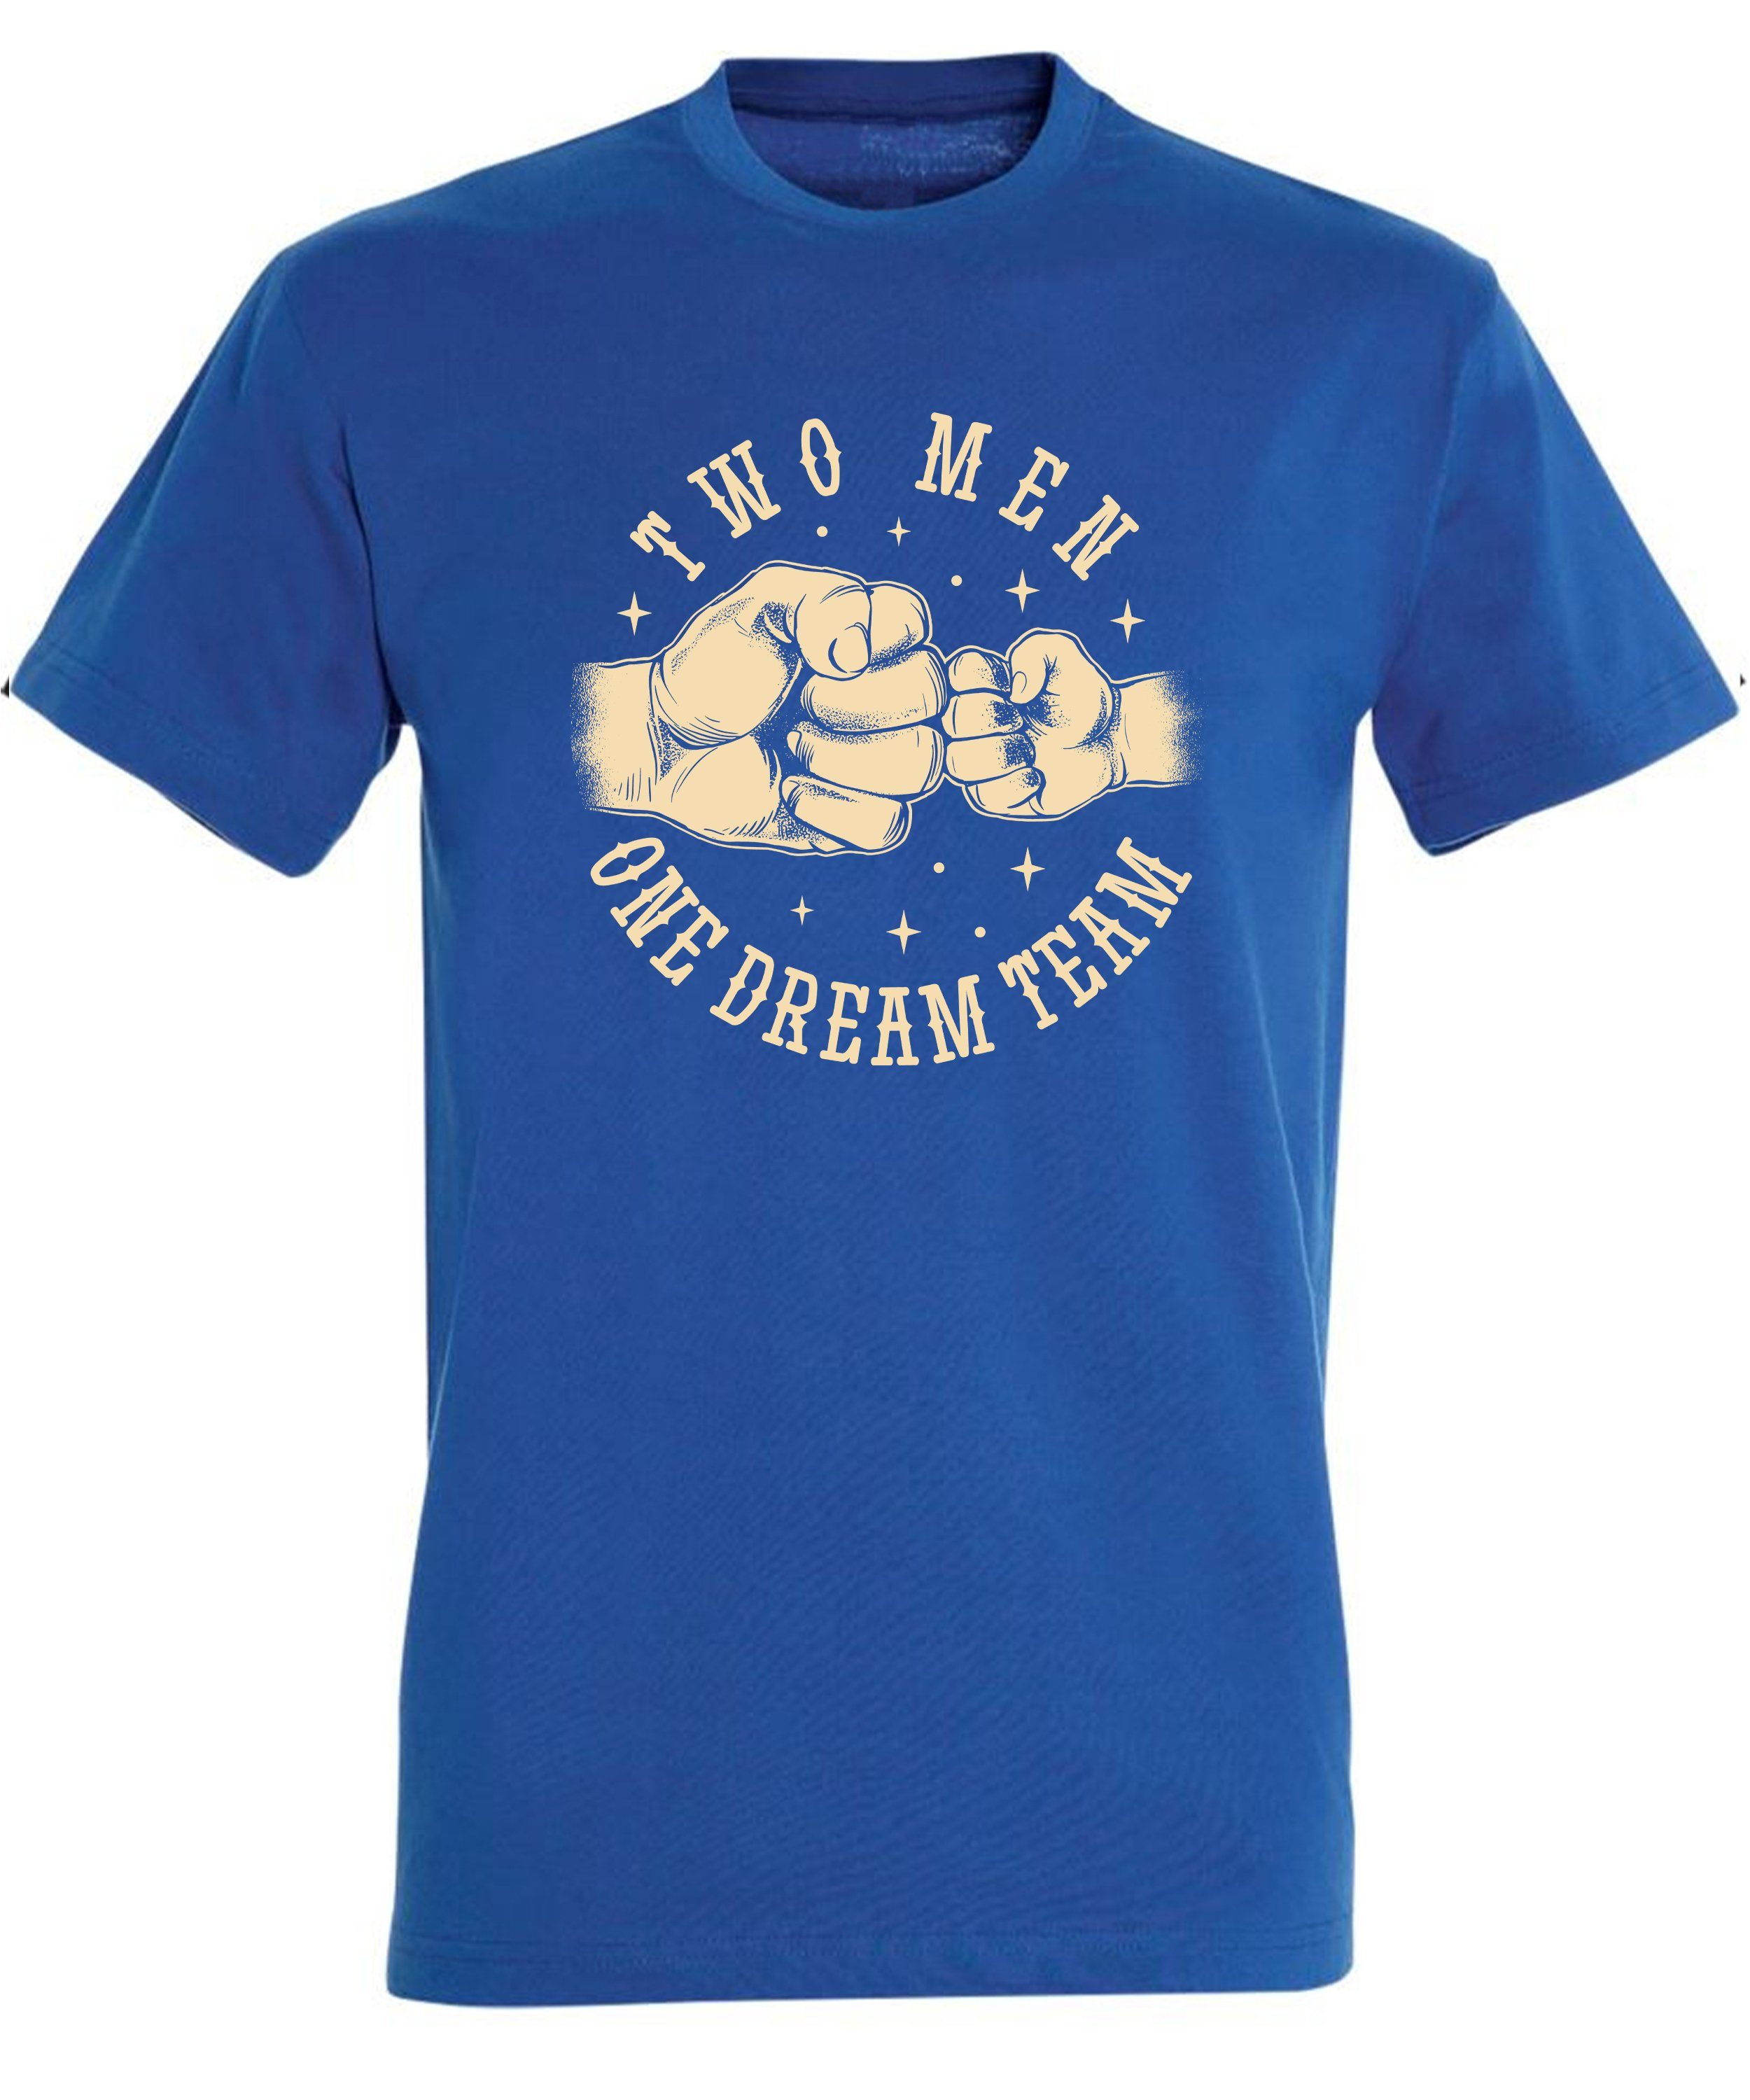 Team mit i306 Sohn Regular Vater Herren blau Baumwollshirt Fit, Aufdruck T-Shirt MyDesign24 Dream royal - Shirt Print mit